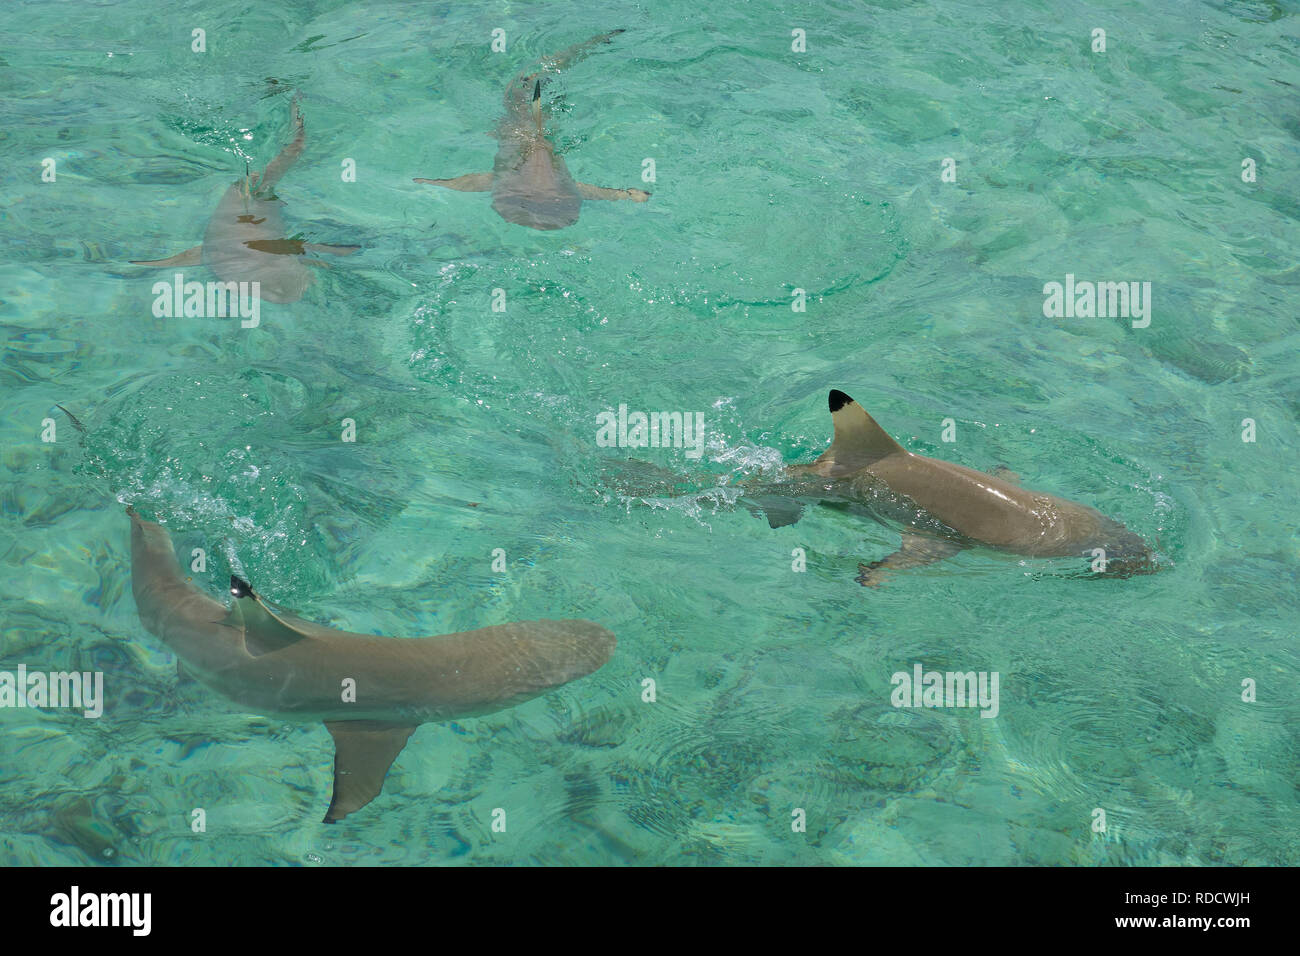 French Polynesia, Bora Bora, small sharks in lagoon Stock Photo